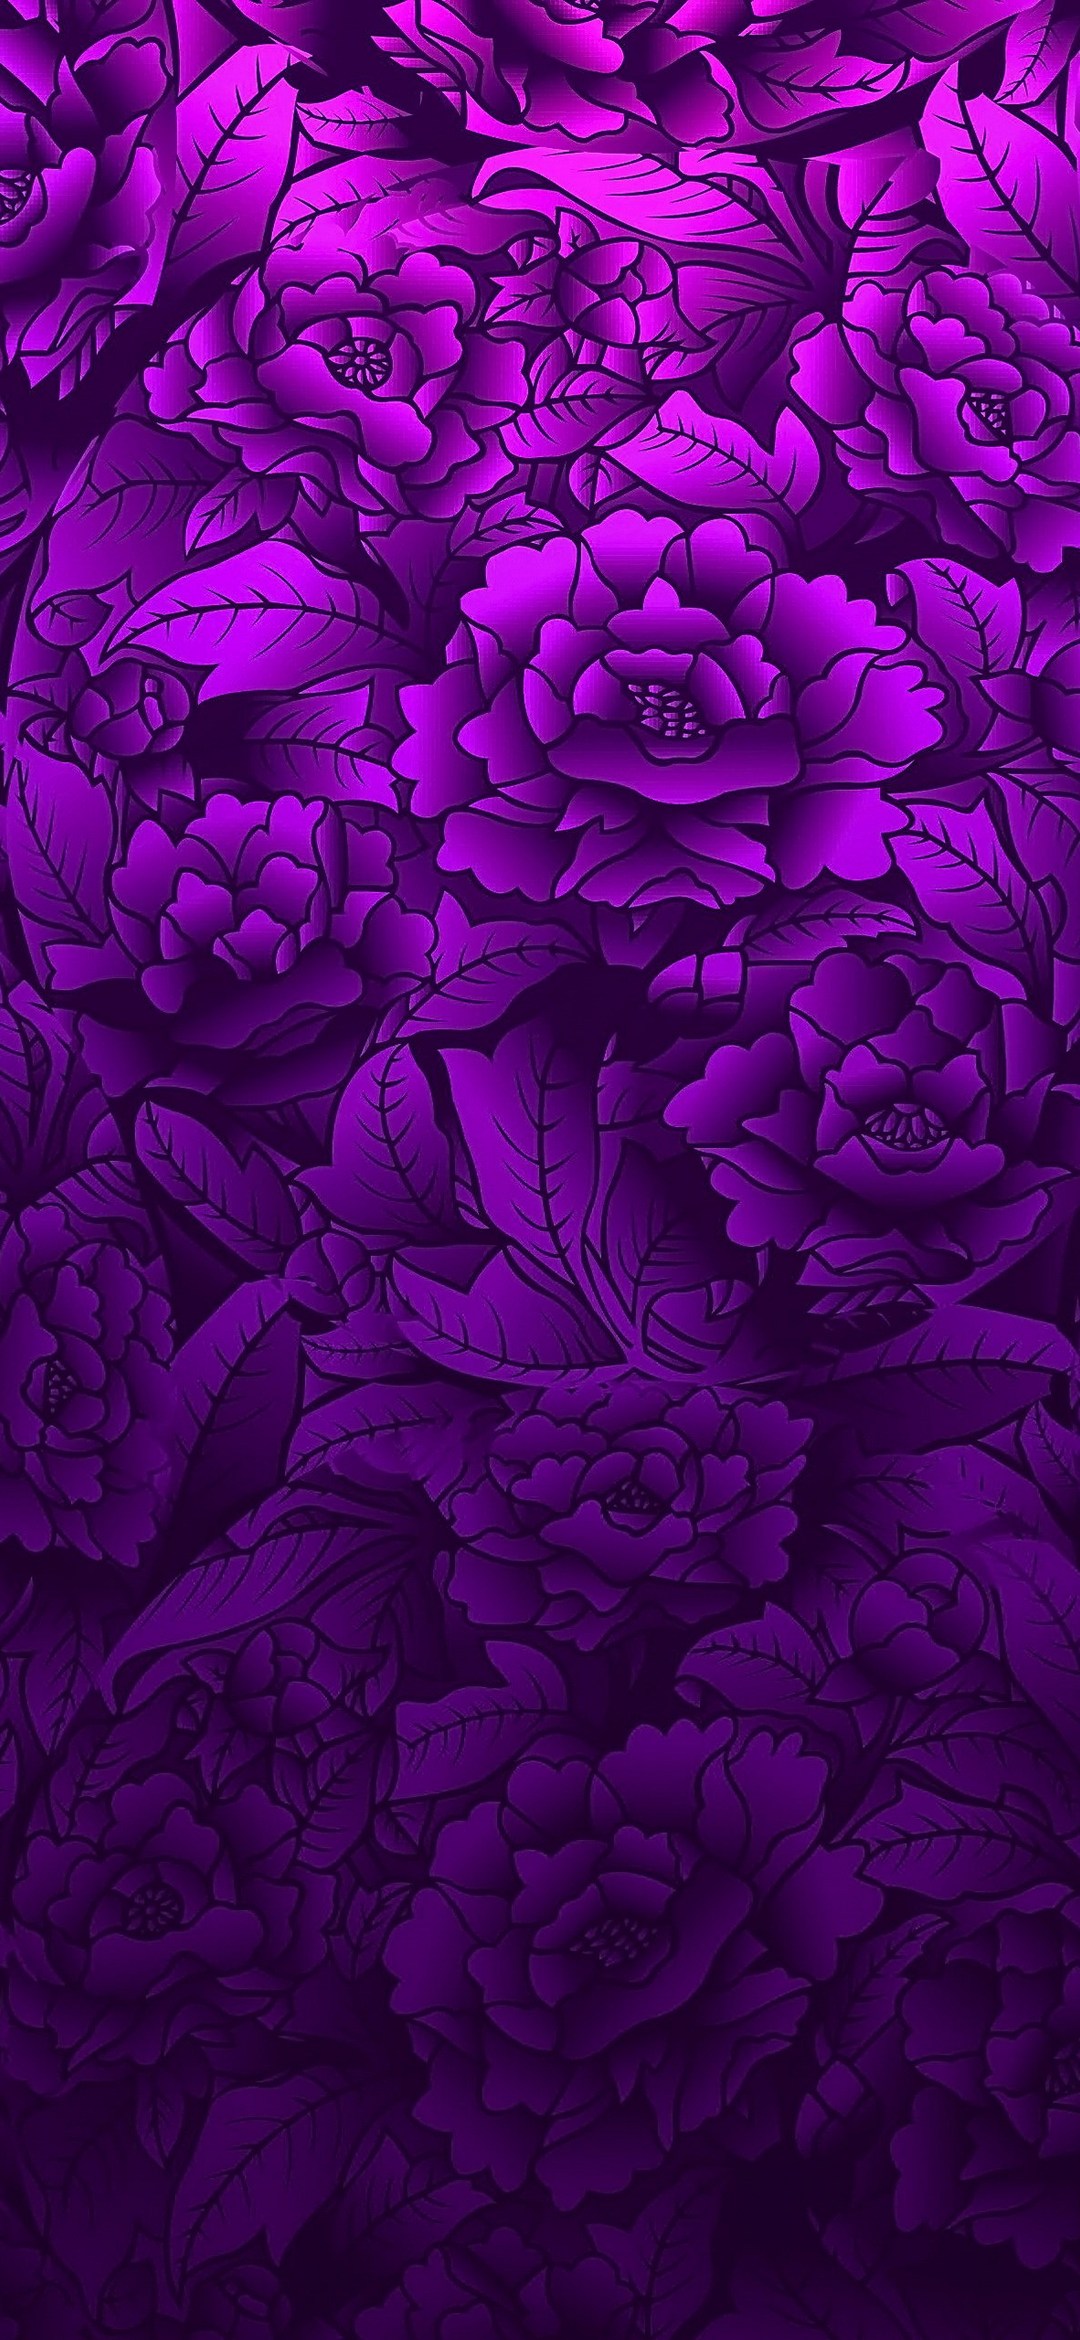 Illustration Of Purple Flowers That Fill The Screen Zenfone 6 Android スマホ壁紙 待ち受け スマラン